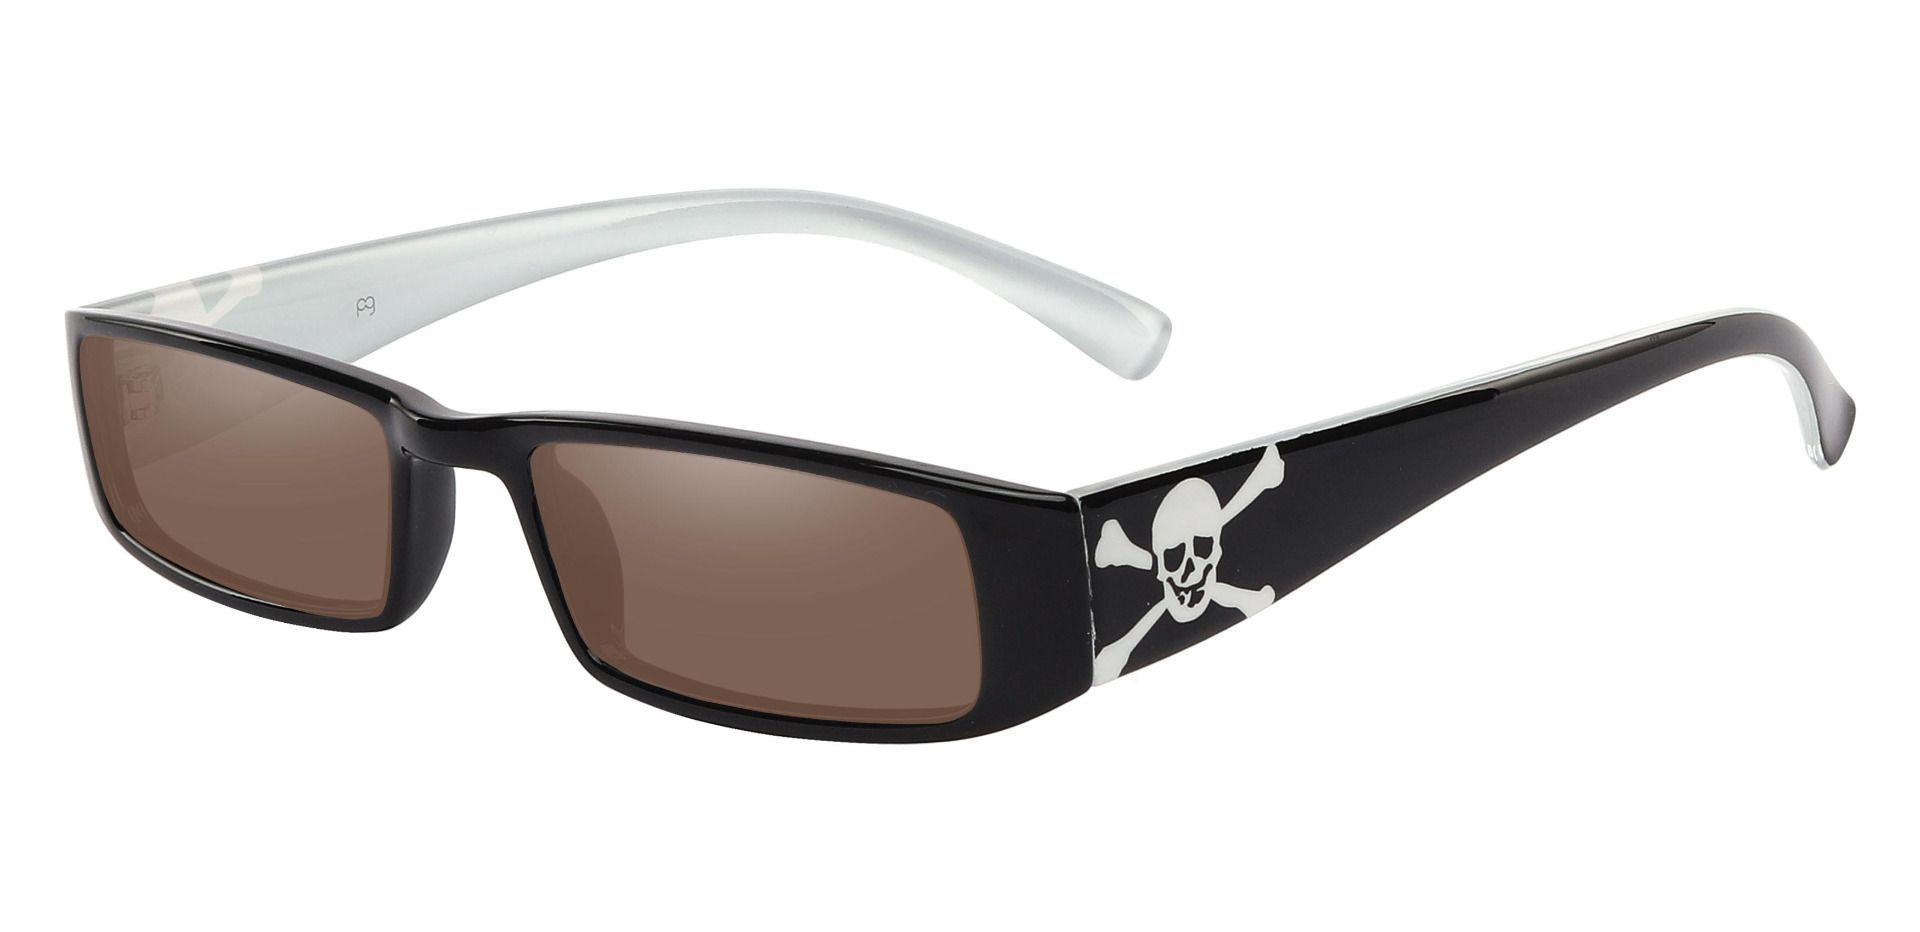 Buccaneer Rectangle Single Vision Sunglasses - Black Frame With Brown Lenses